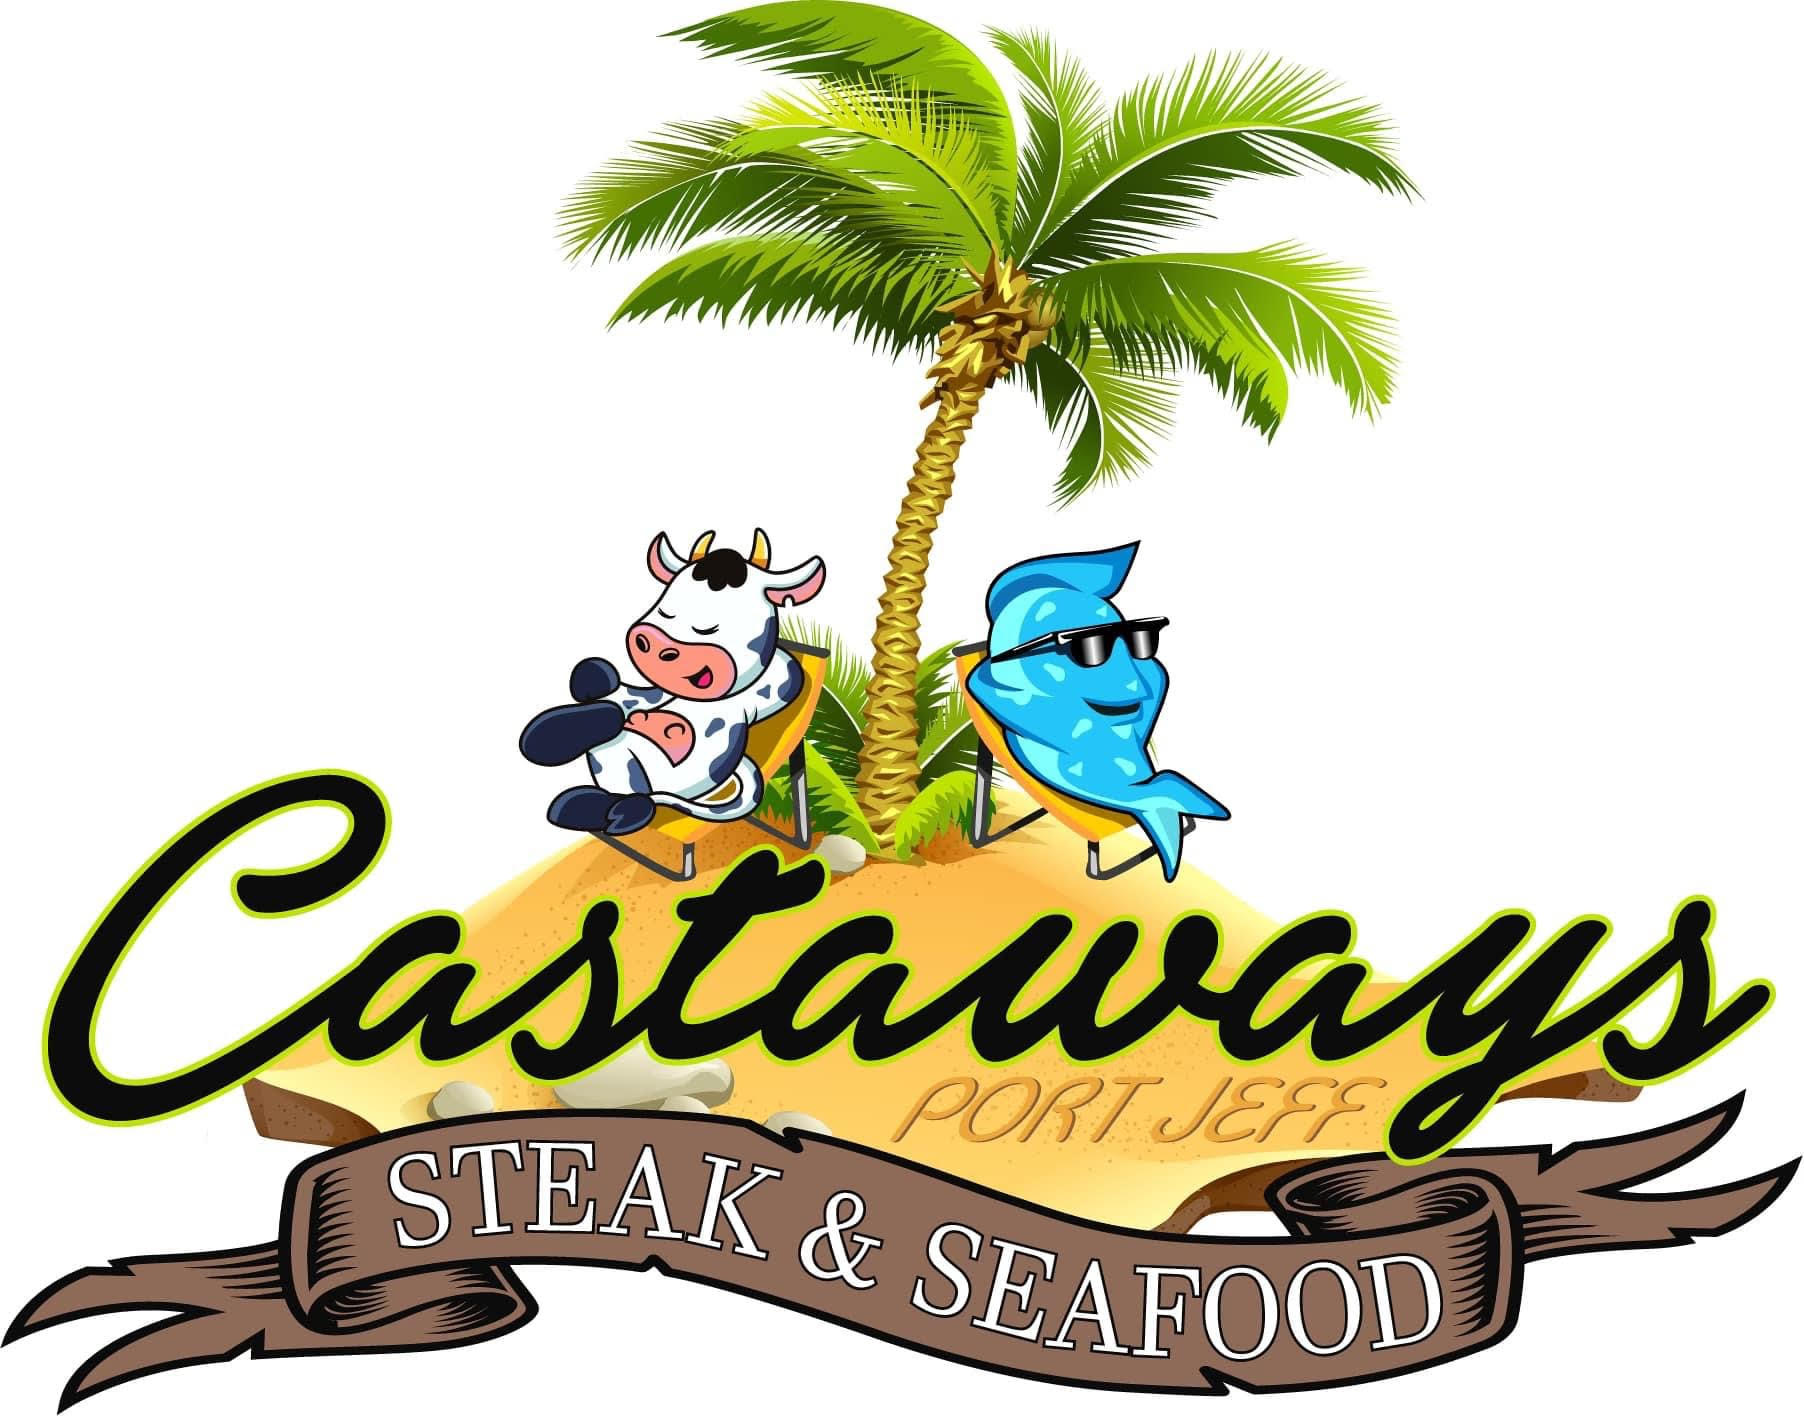 Castaways Logo